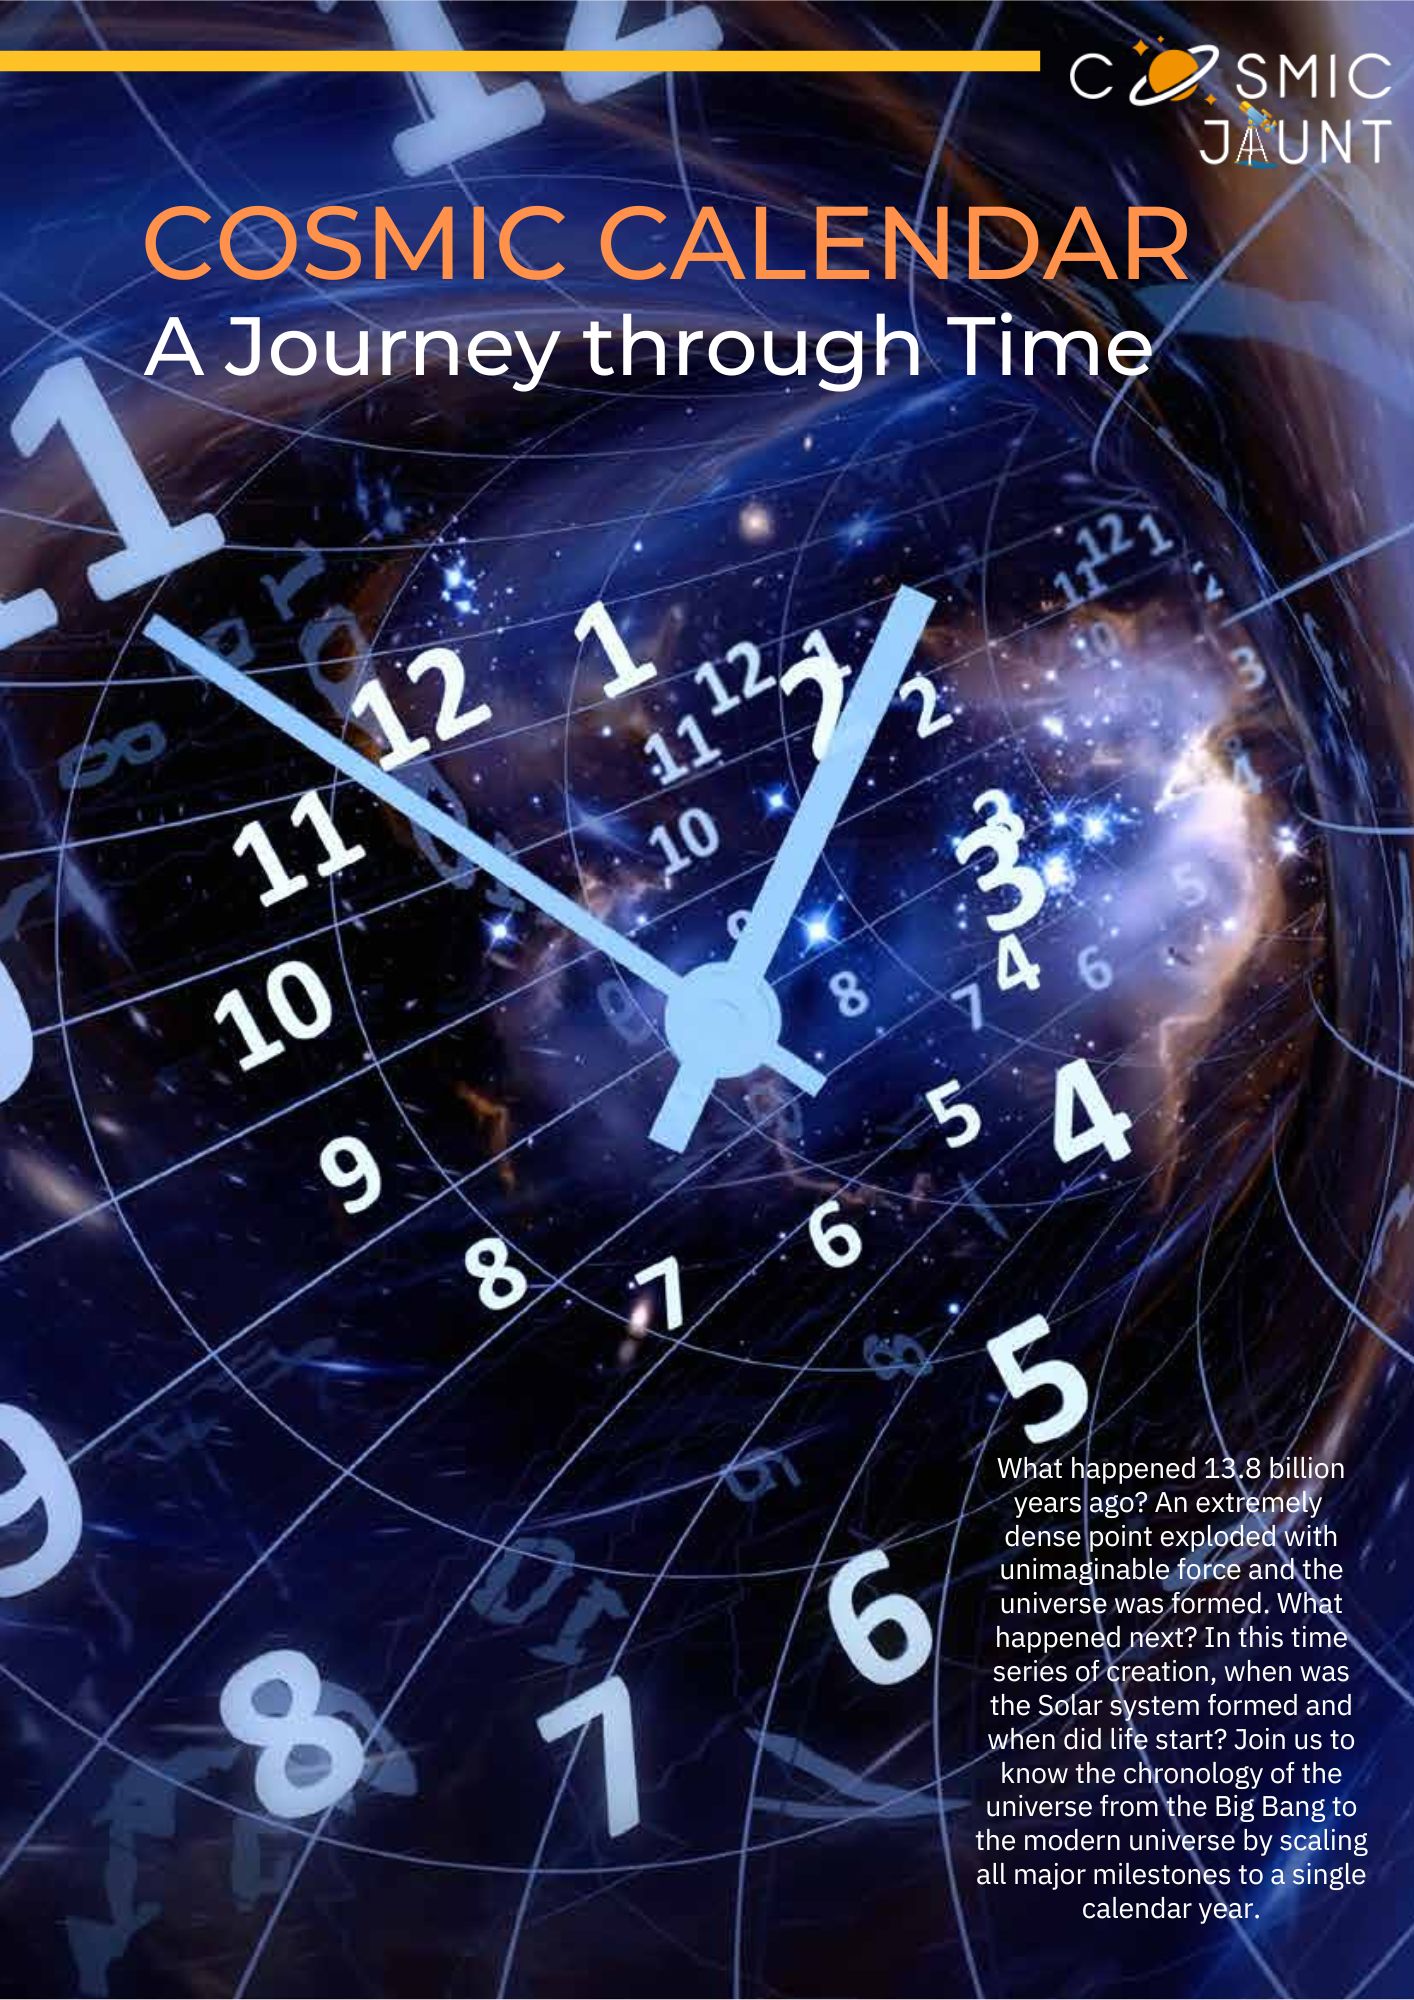  Cosmic Calendar, a  journey through time